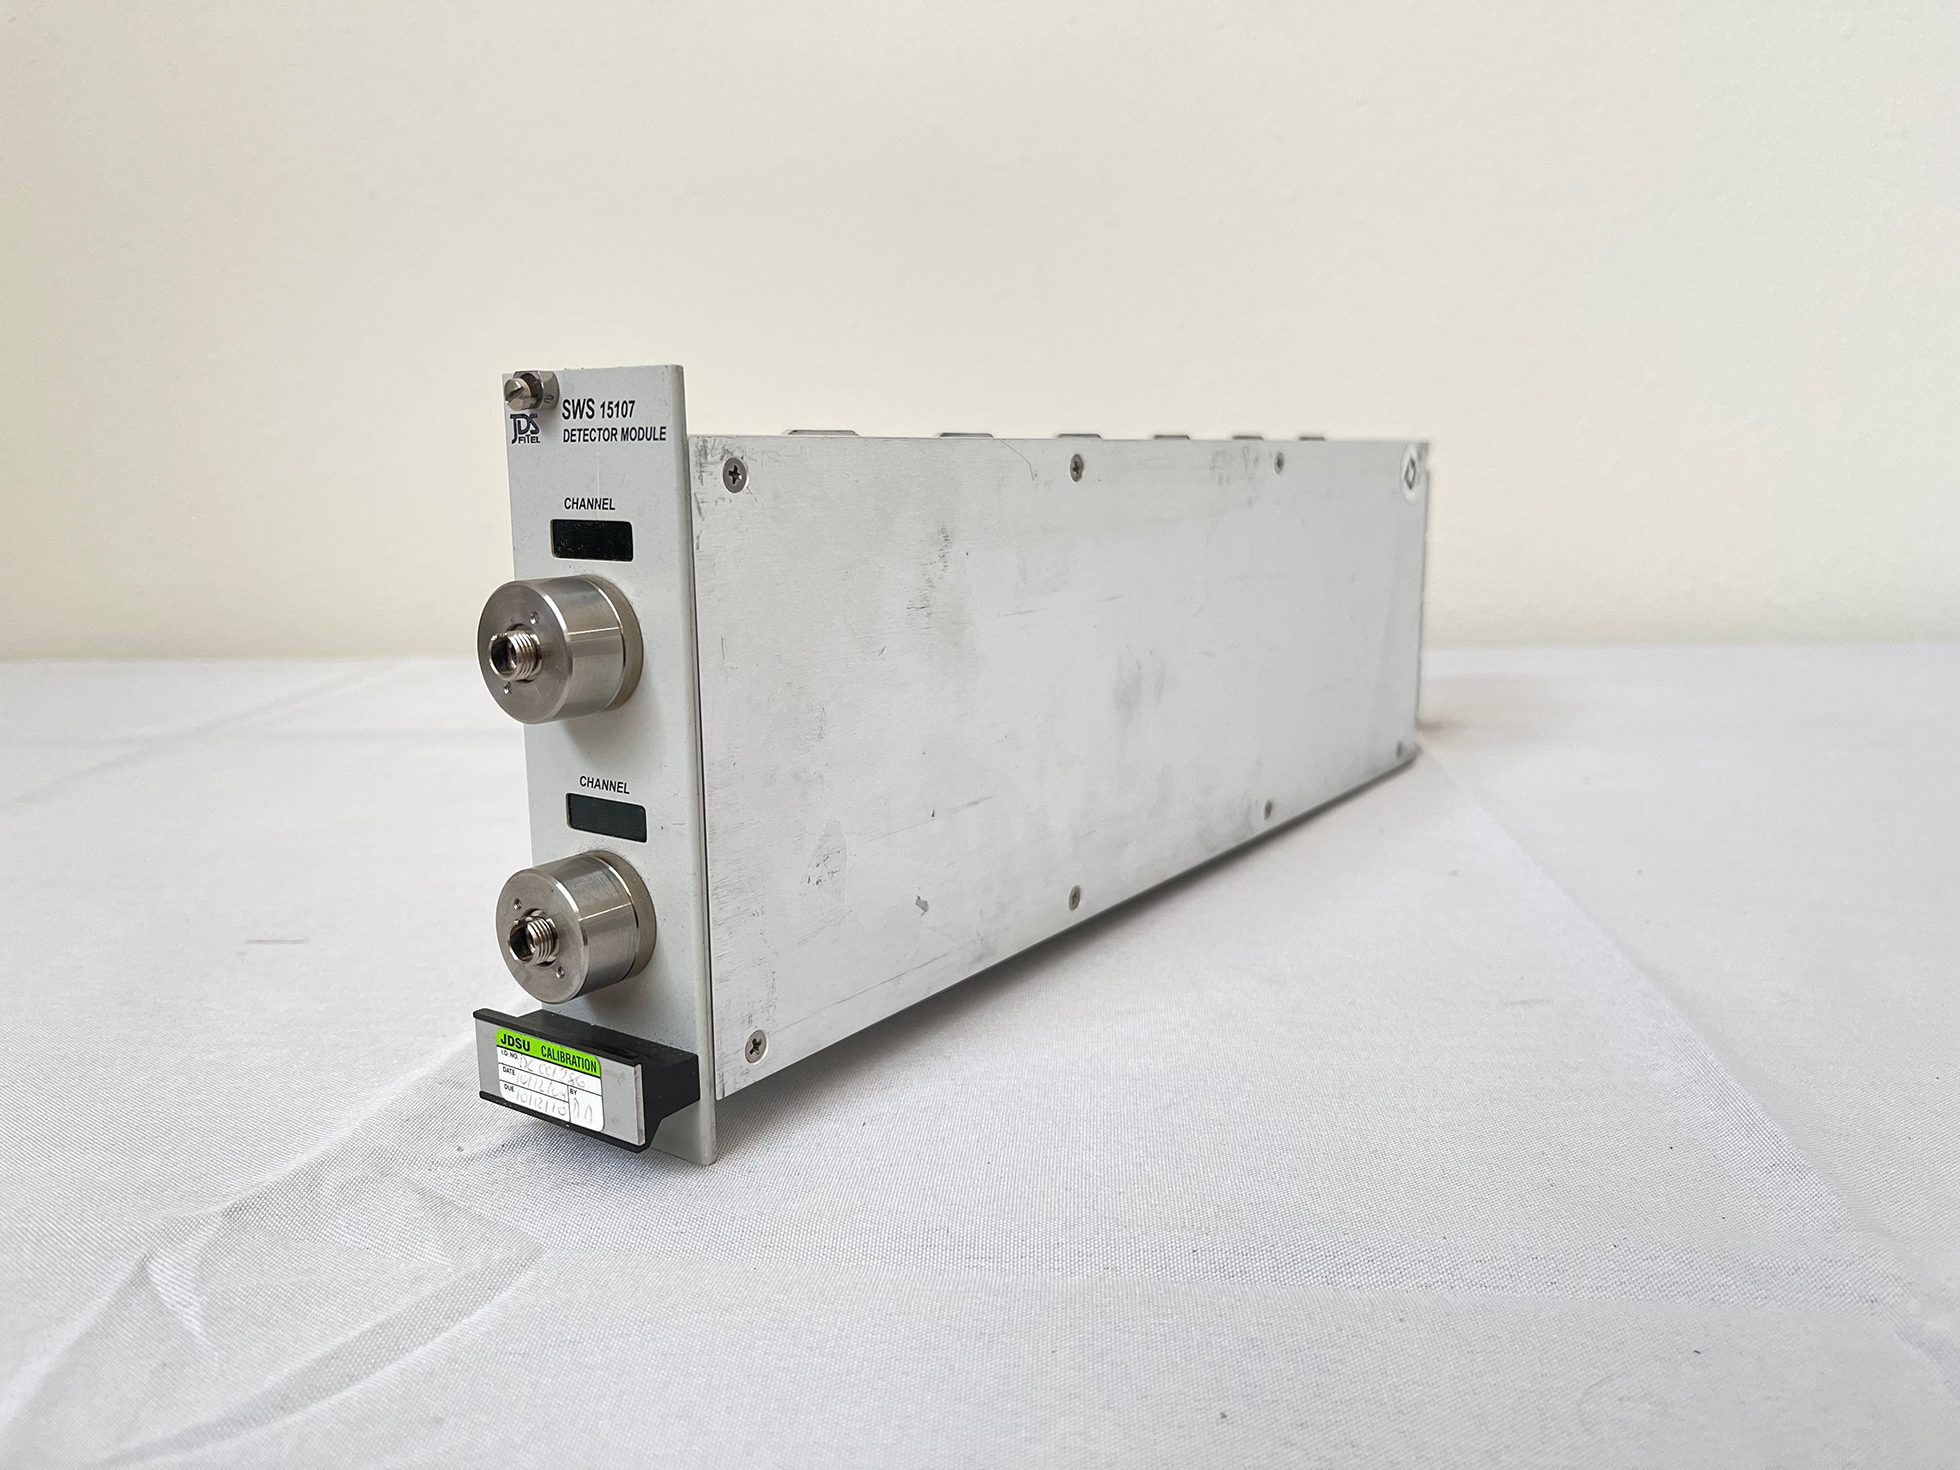 JDSU SWS 15107 Detector Module -61962 For Sale